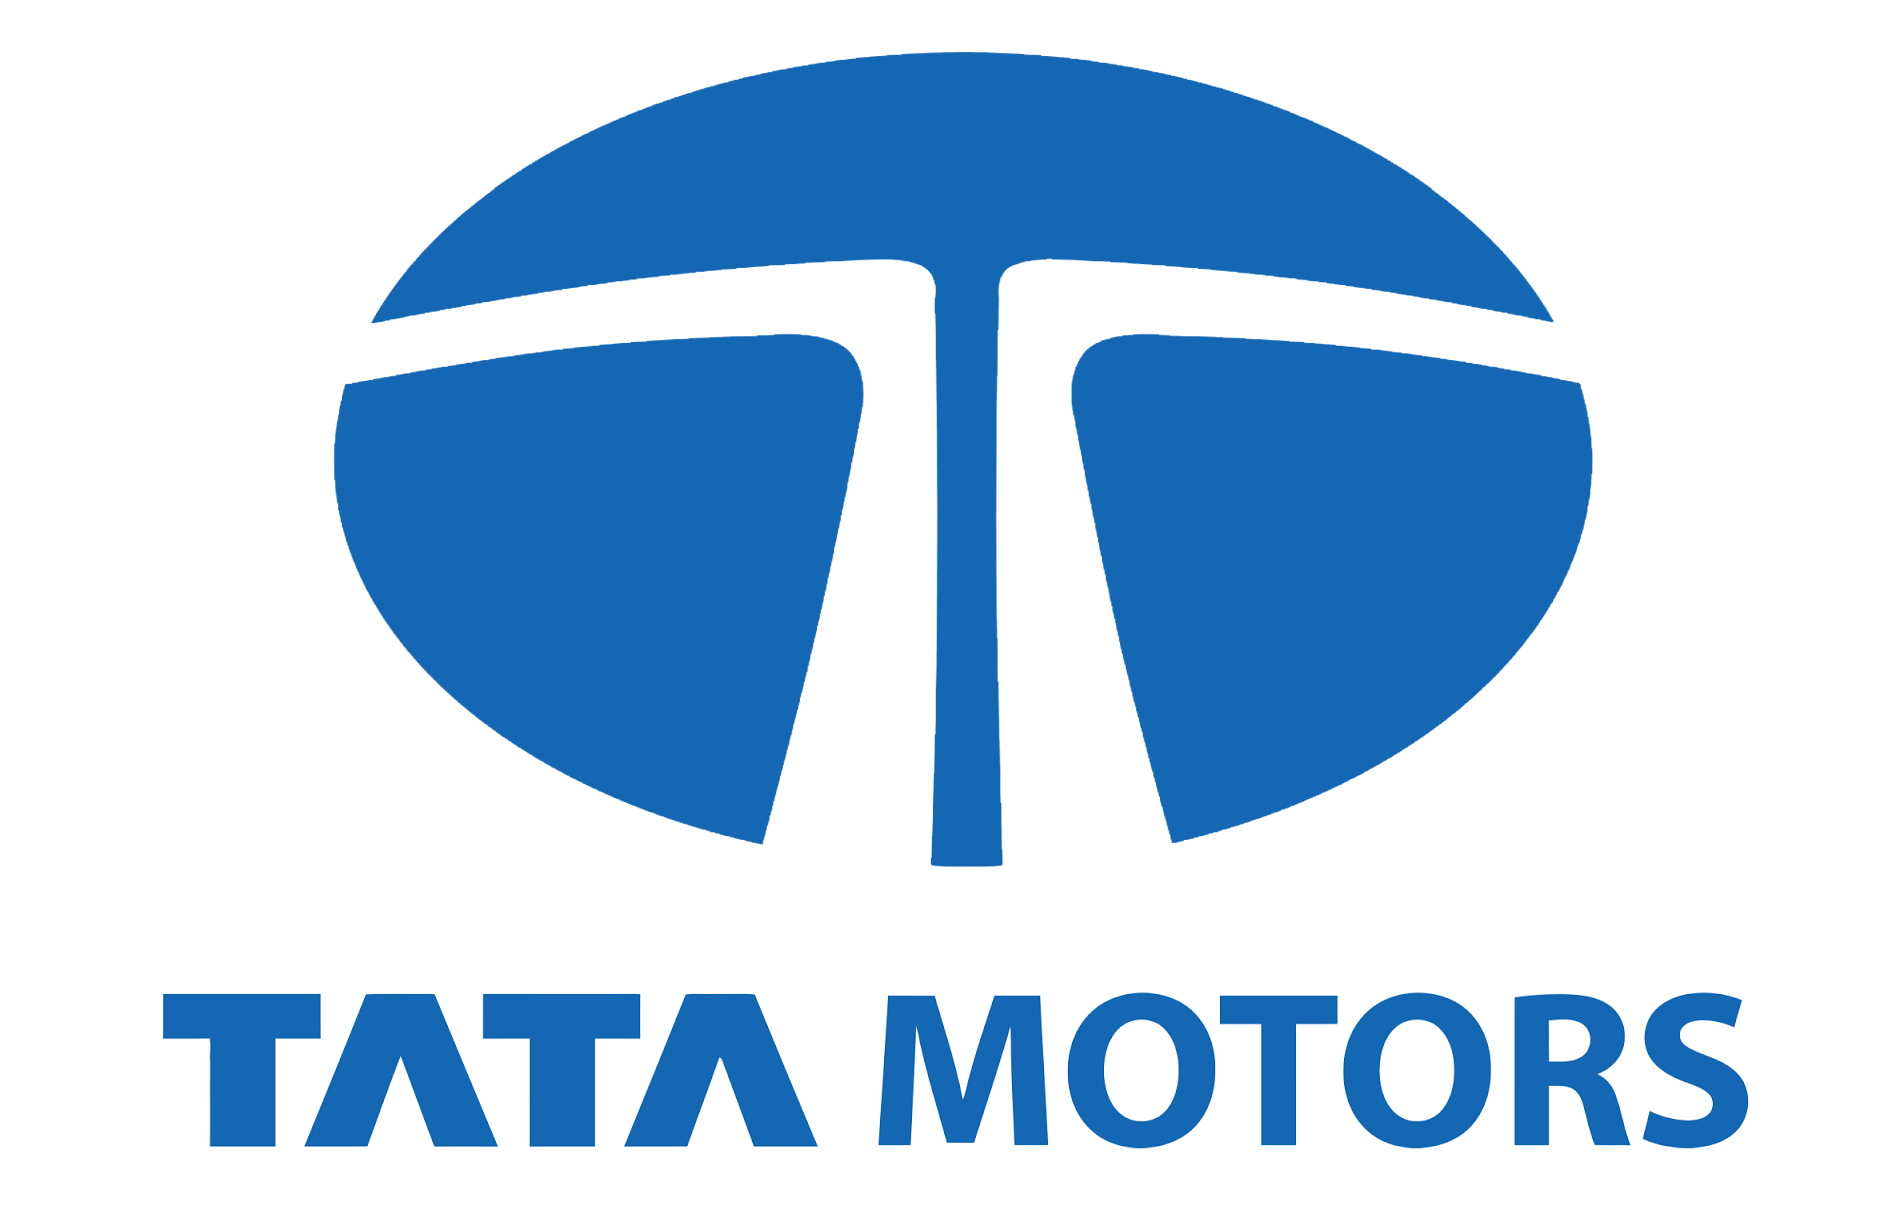 Tata Motors Cars Showroom - Bhagirath|Show Room|Automotive